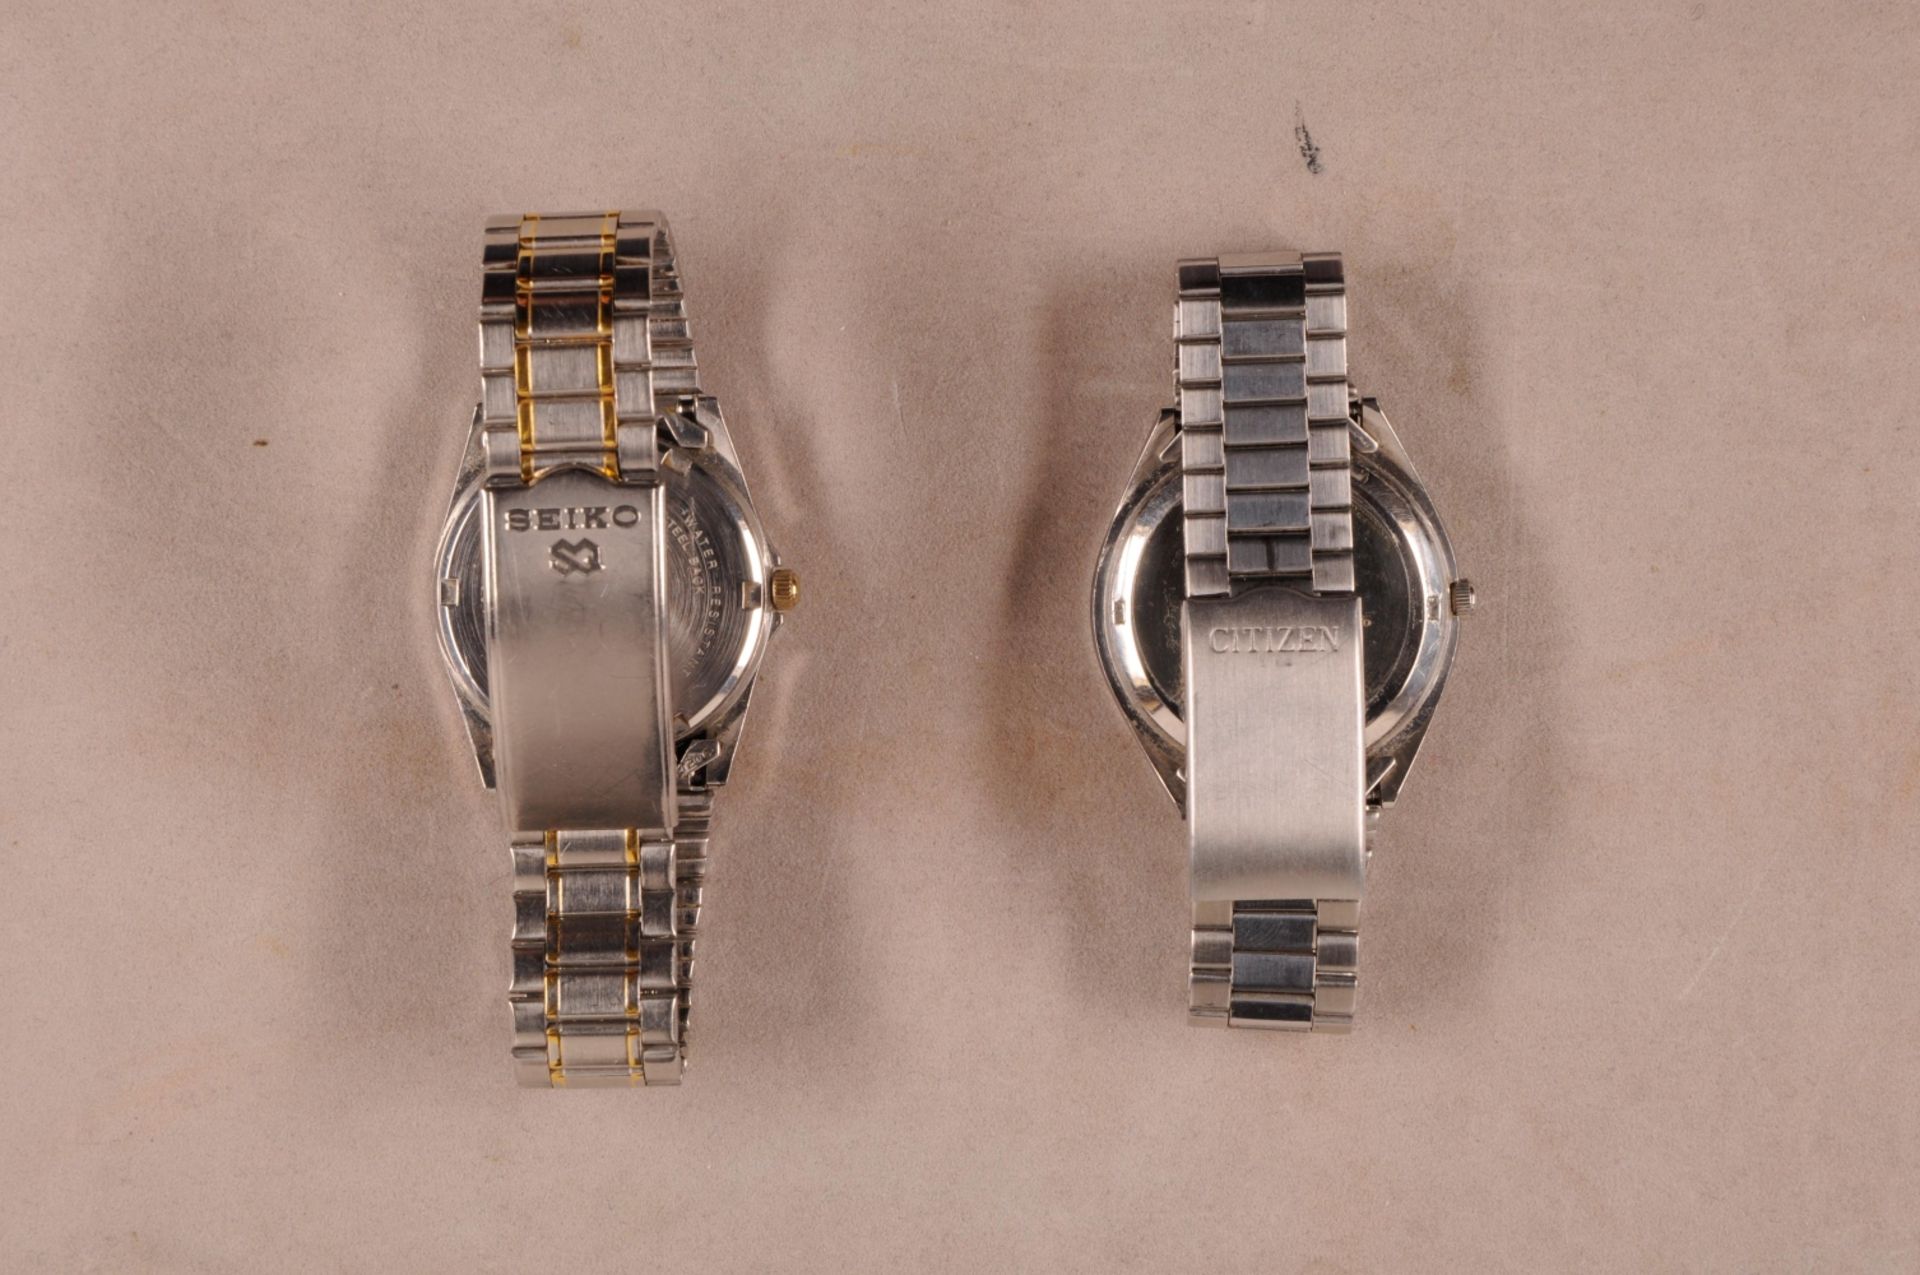 Lot 7 Armbanduhren Edelstahl/Metall/Kunststoff, tlw. vergoldet, bestehend aus: Seiko, Citizen, Jungh - Bild 5 aus 5